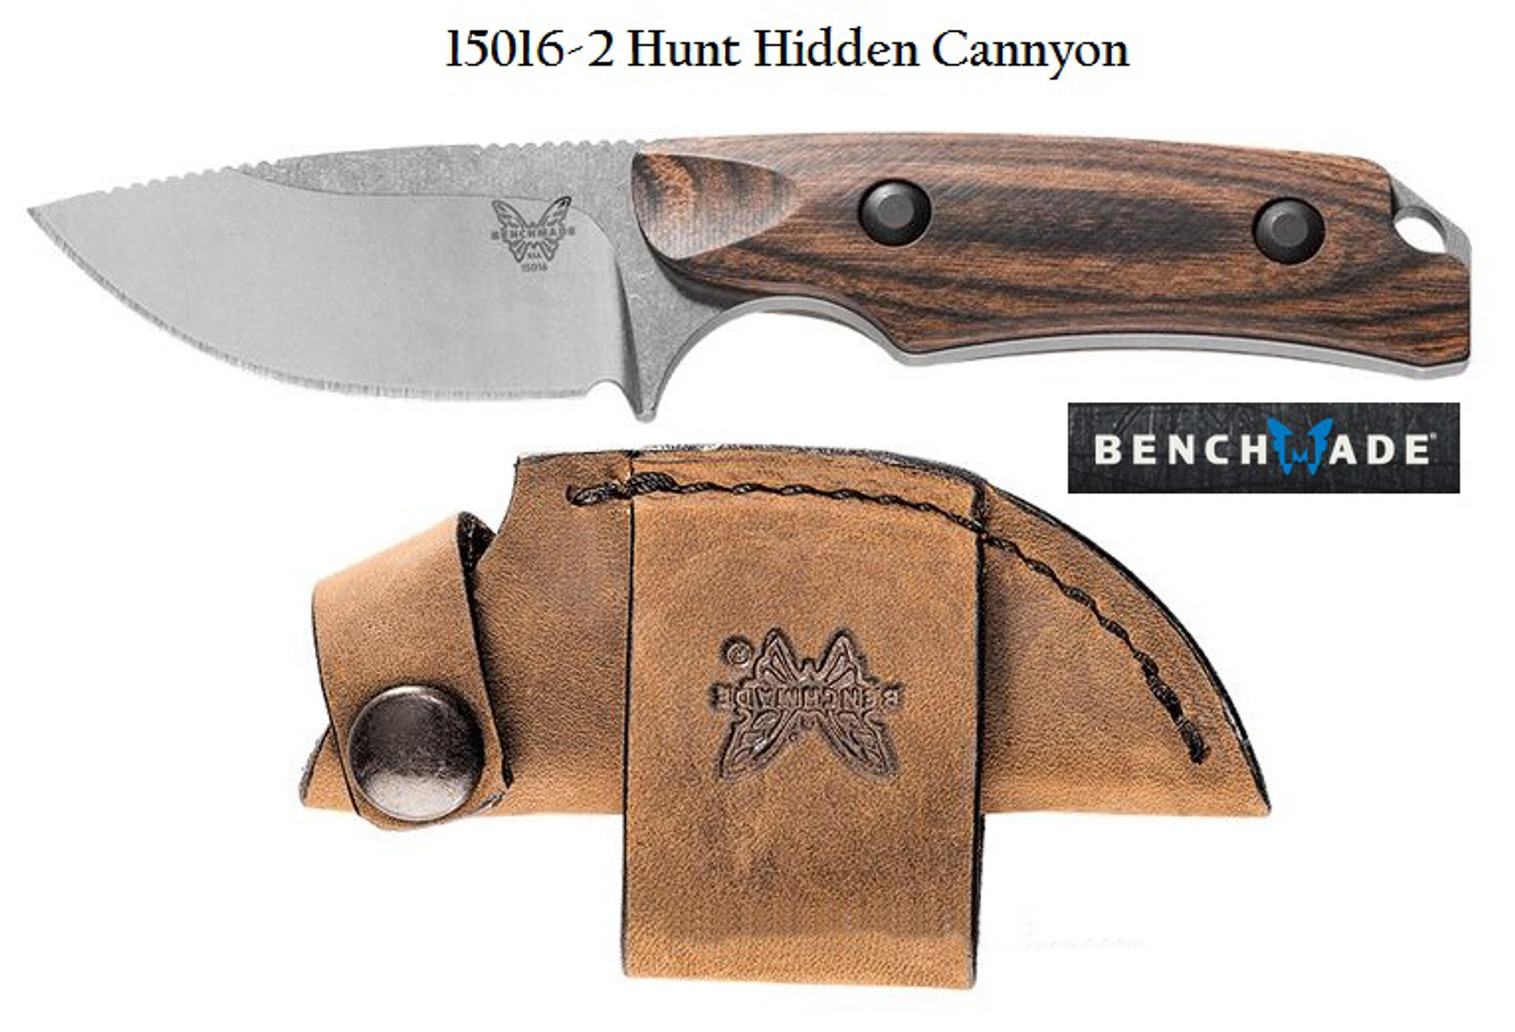 Benchmade Hunt 15016-2 S30V Hidden Canyon Hunter - Dymondwood